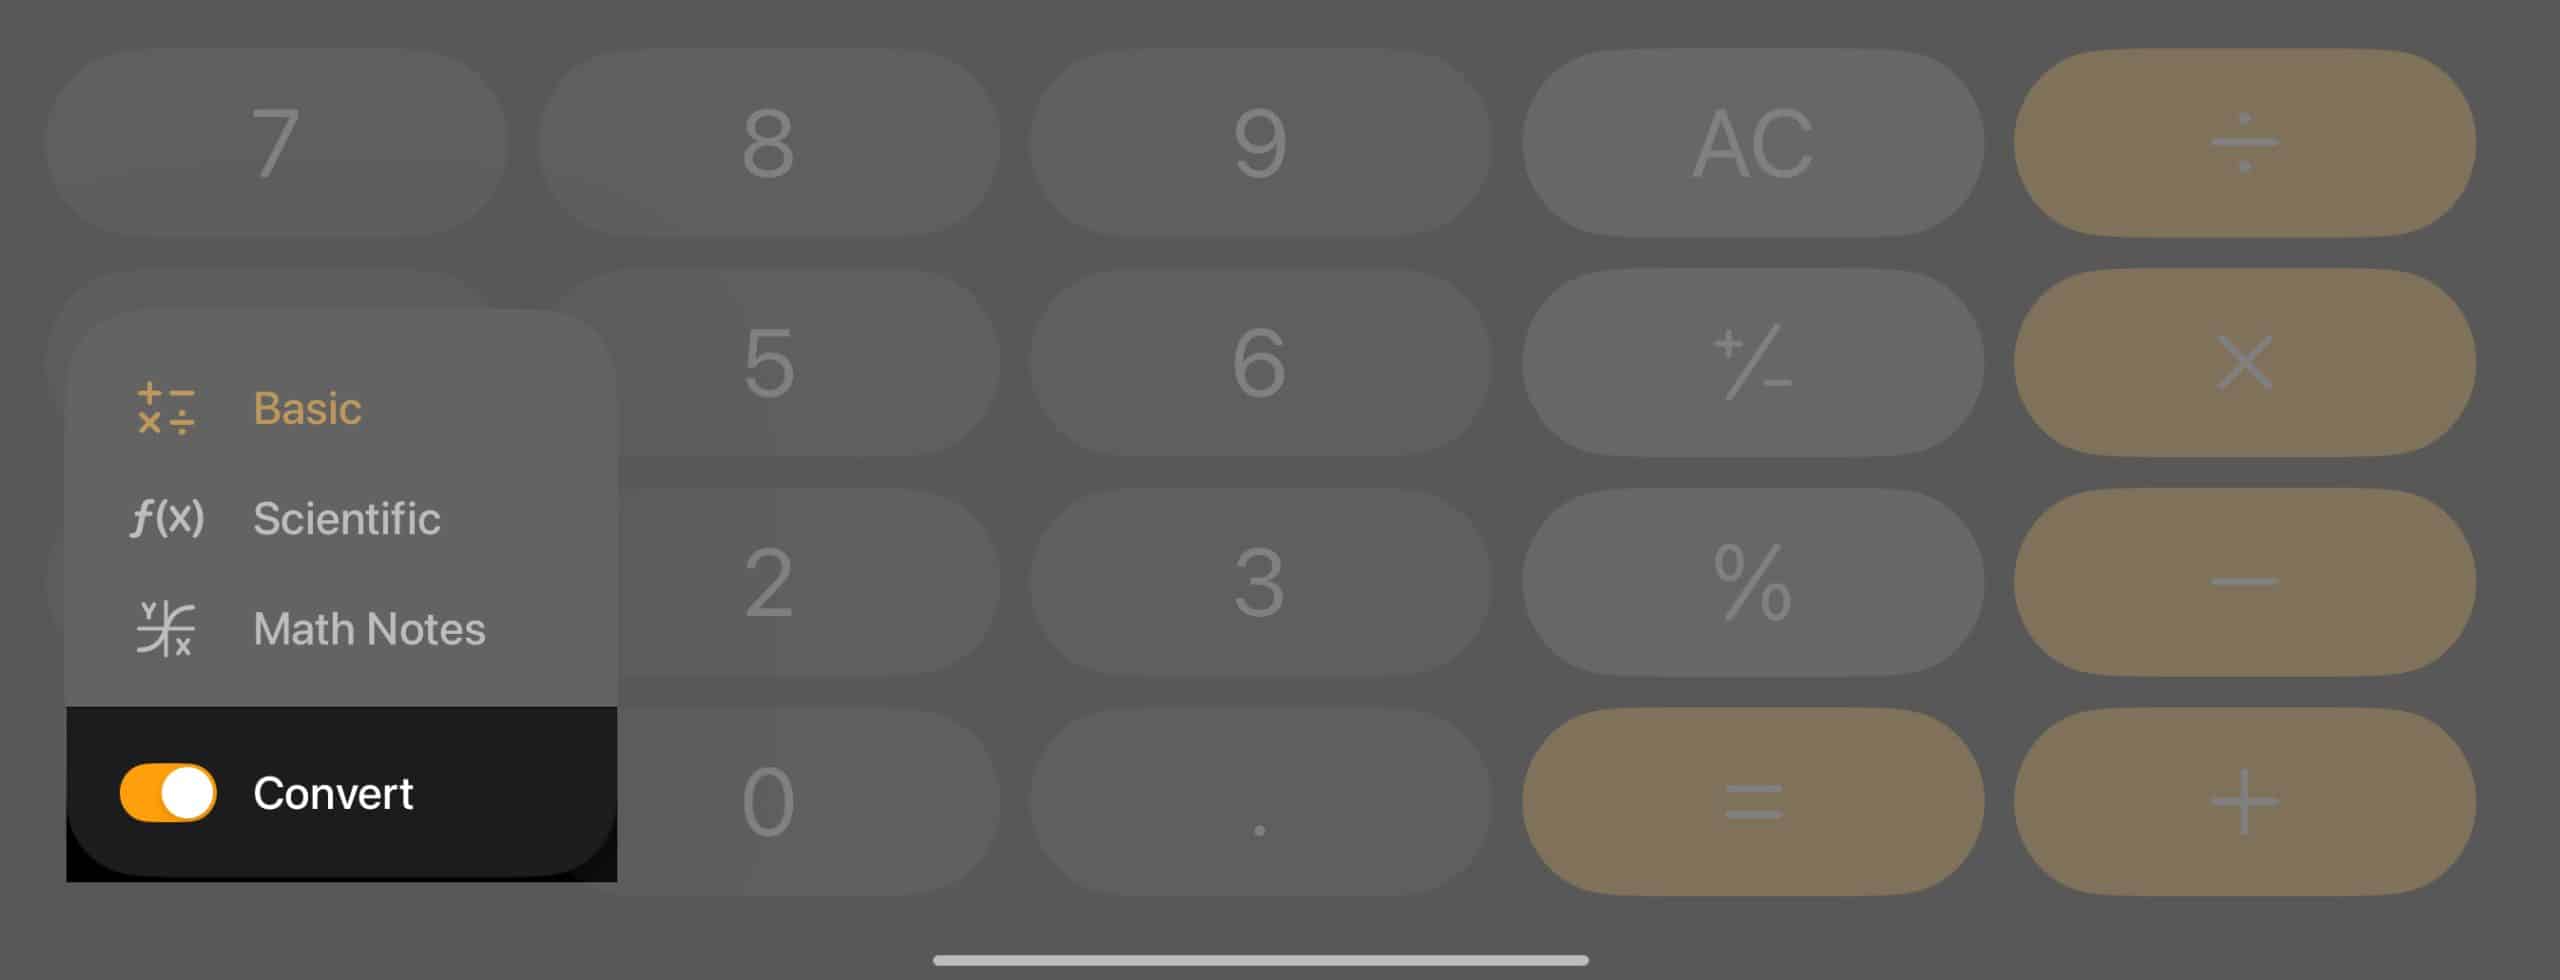 Toggle on Convert to convert using Calculator app on iPad